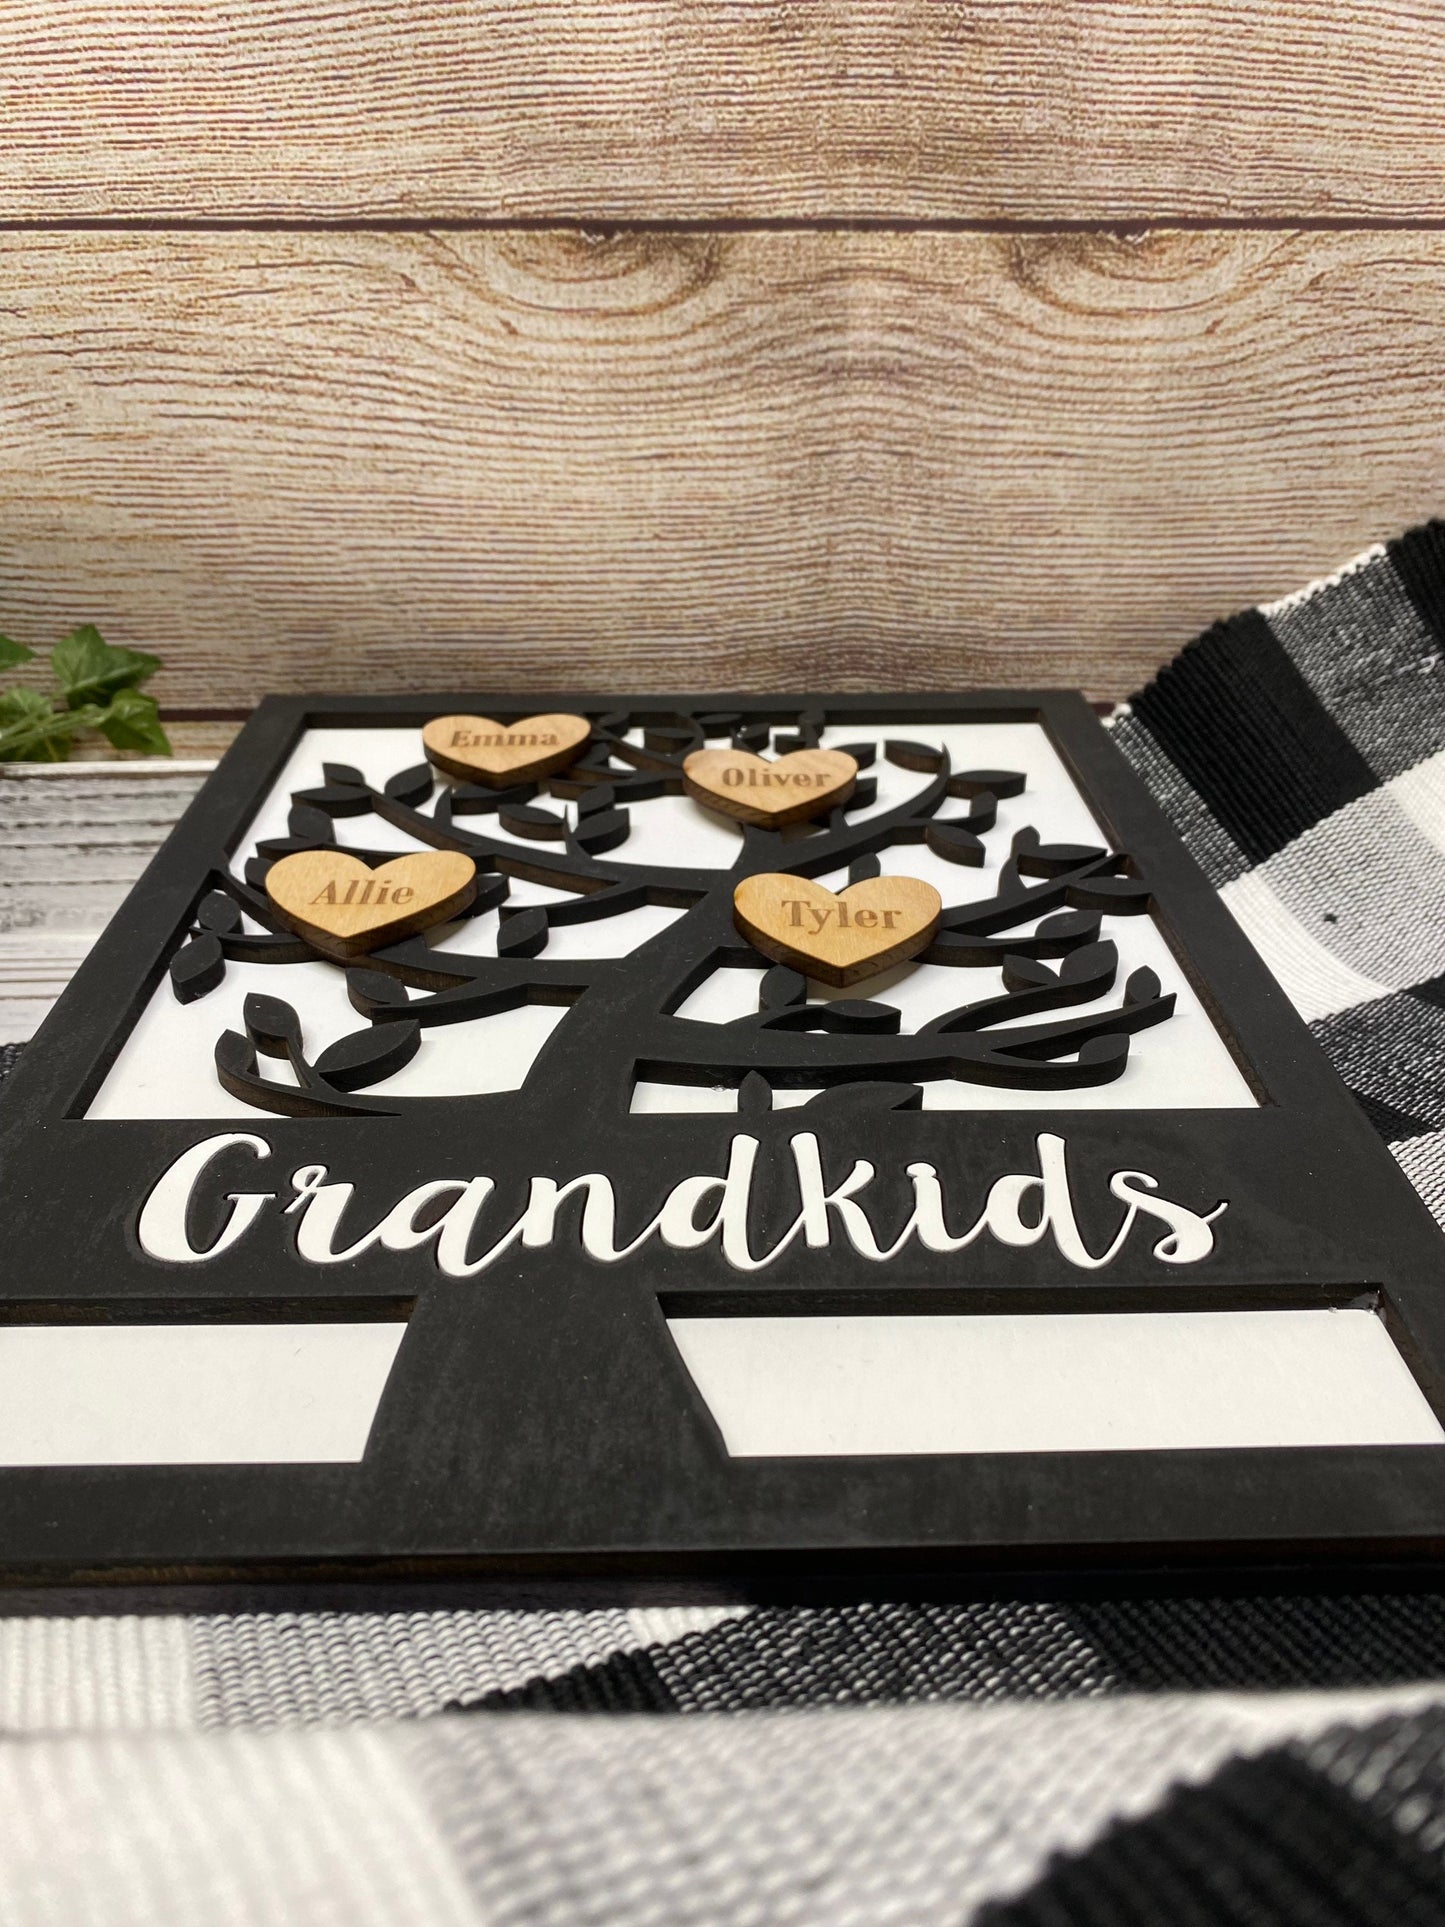 Grandkids Family Tree Sign